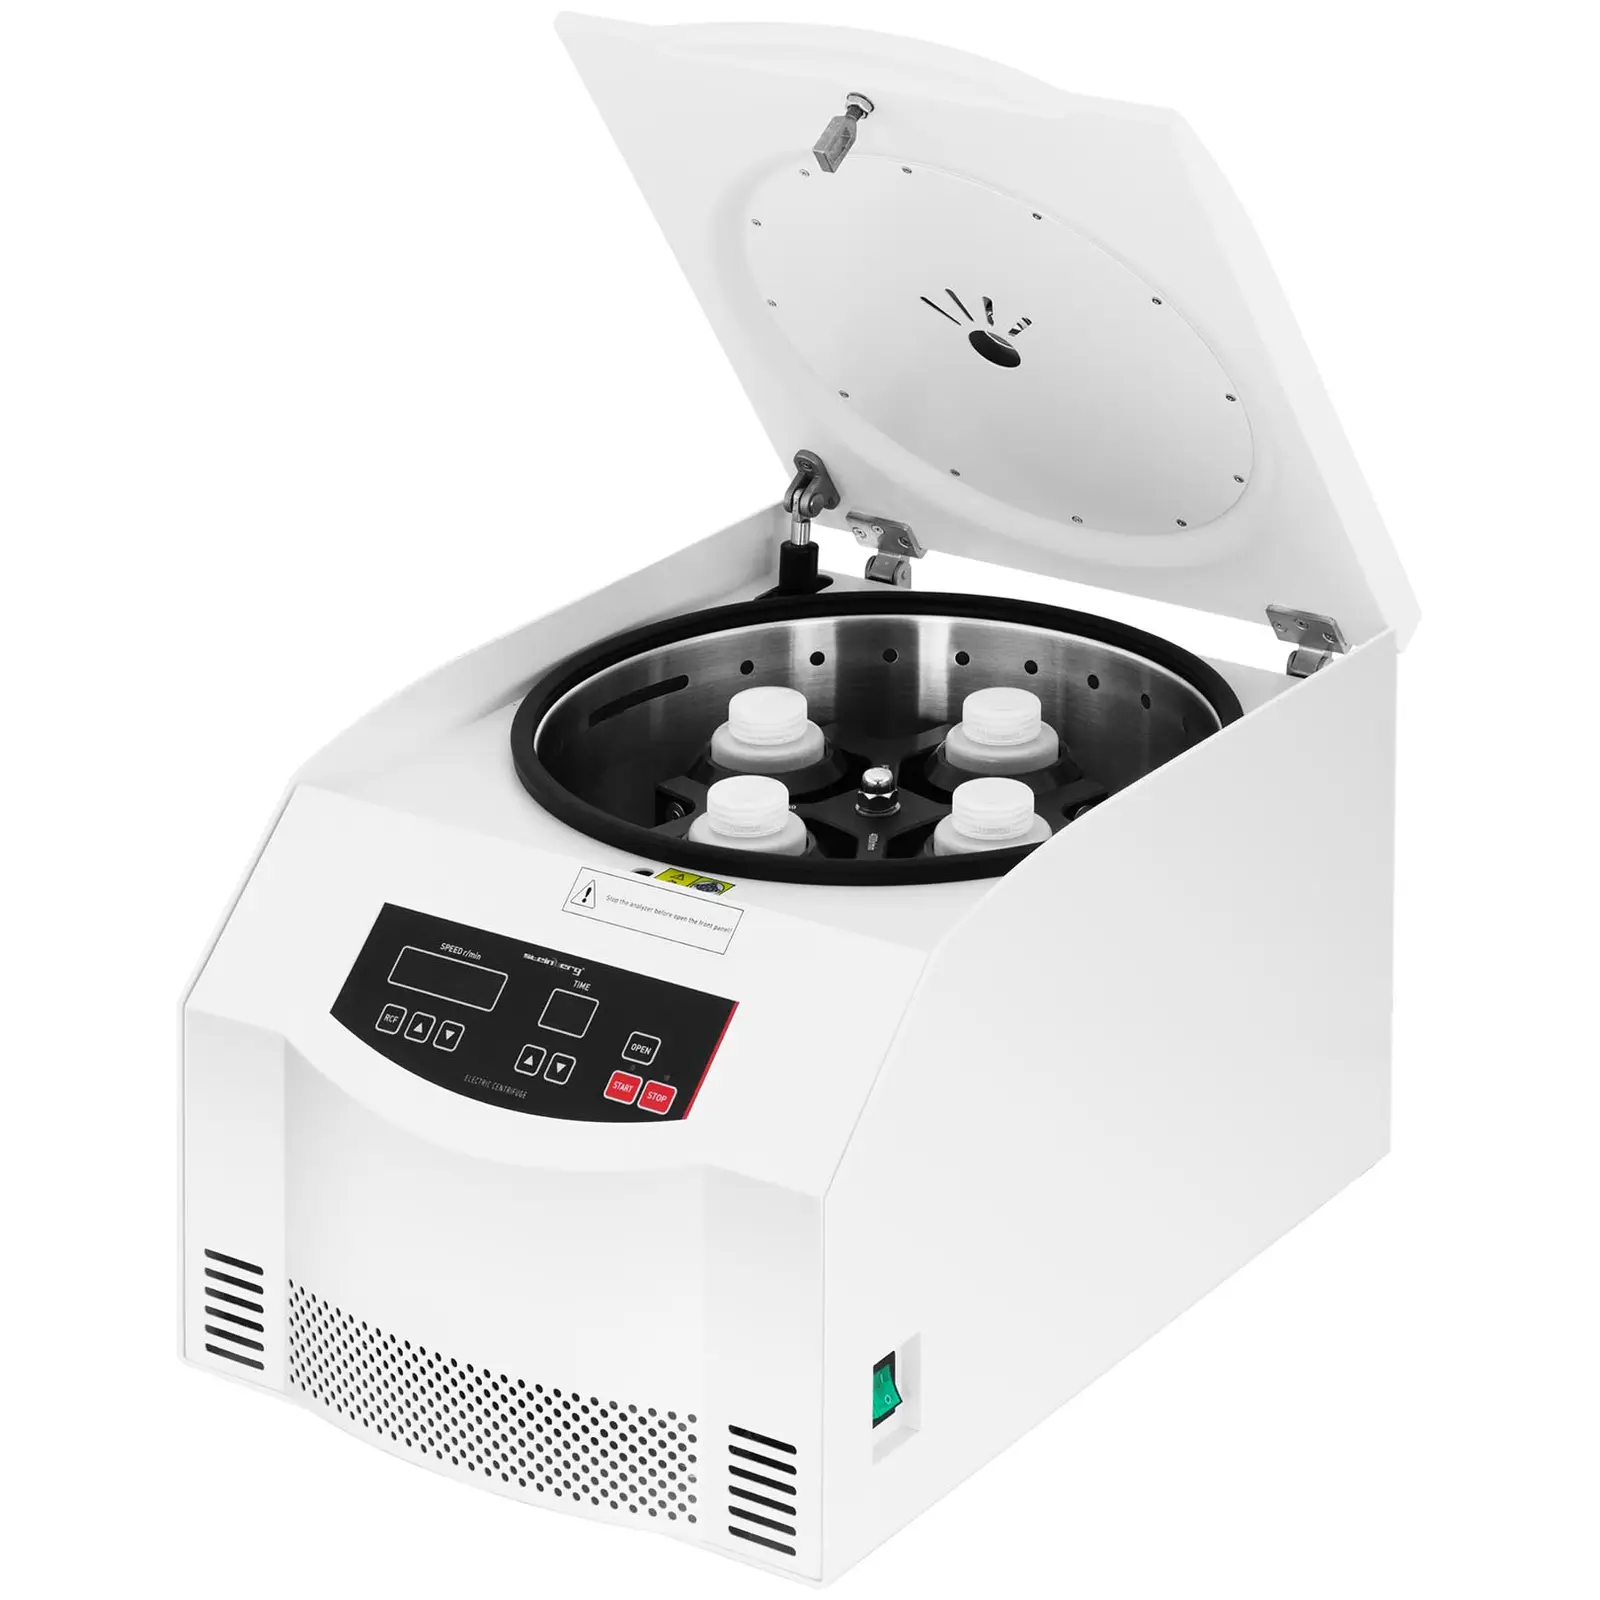 Stolní centrifuga - 4 x 250 ml - RCF 4730 xg